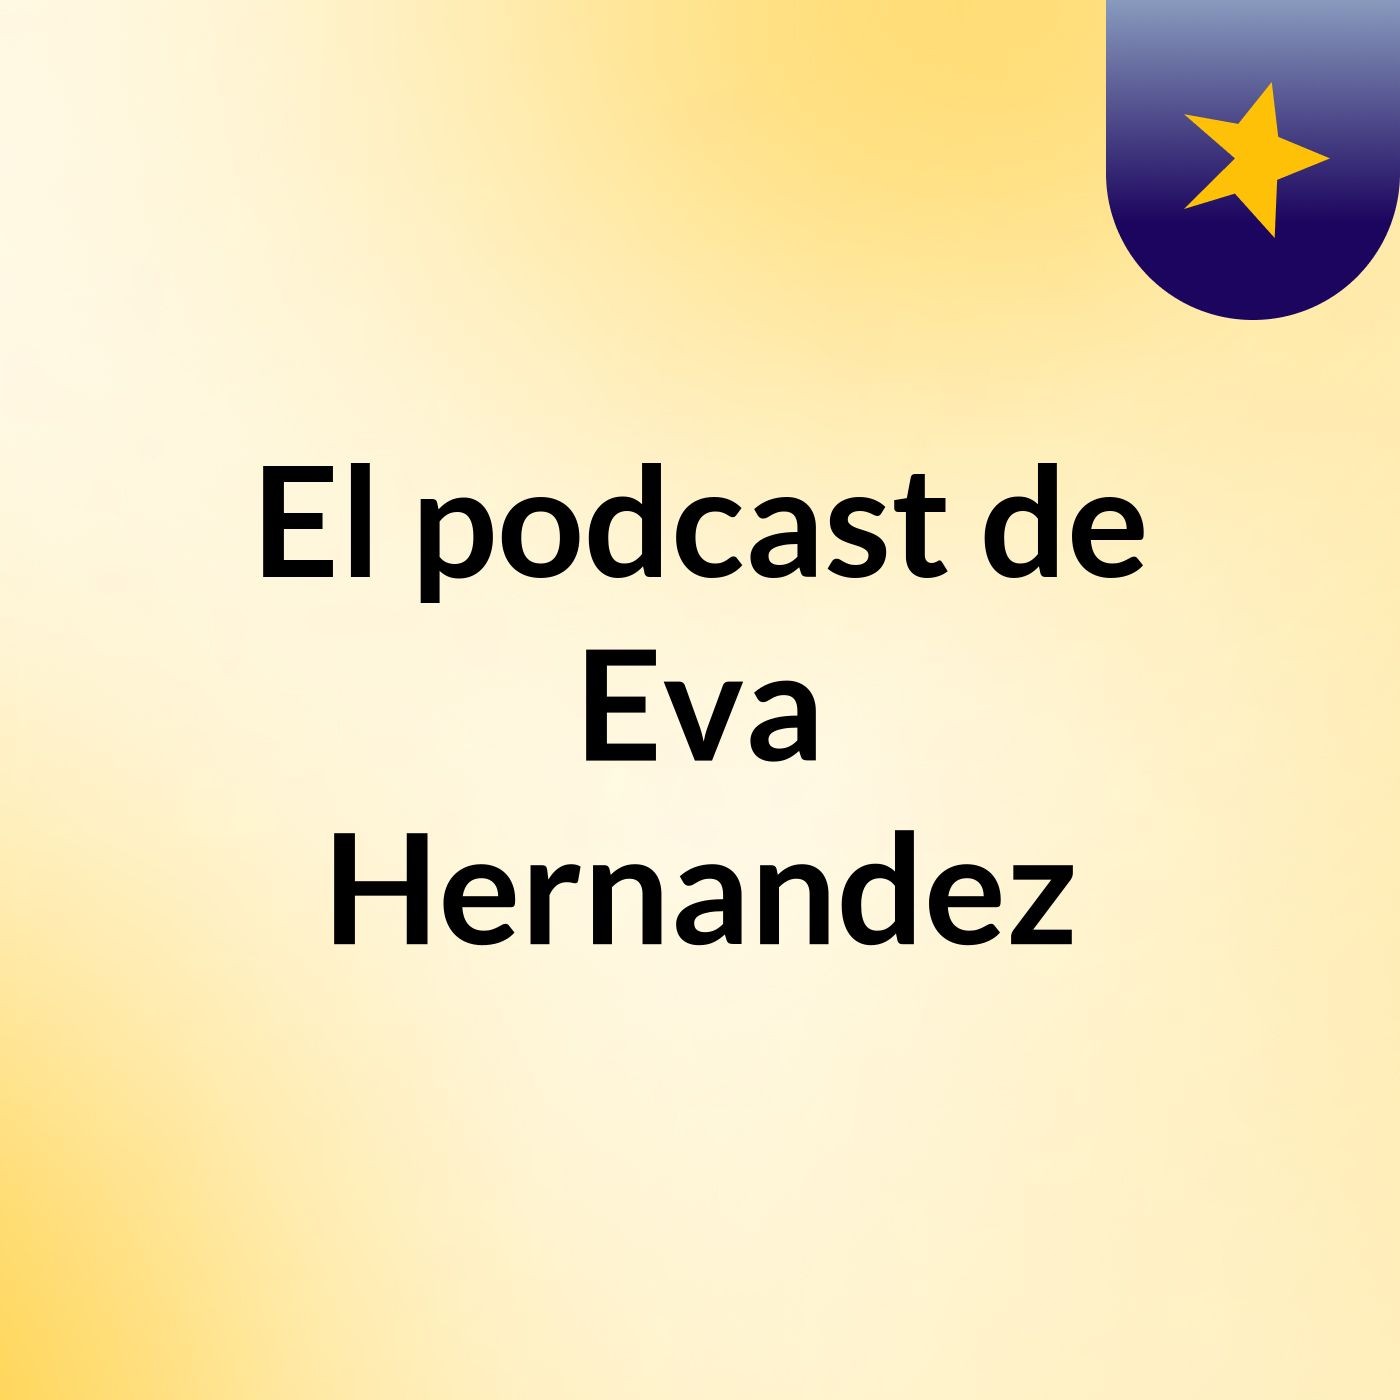 El podcast de Eva Hernandez